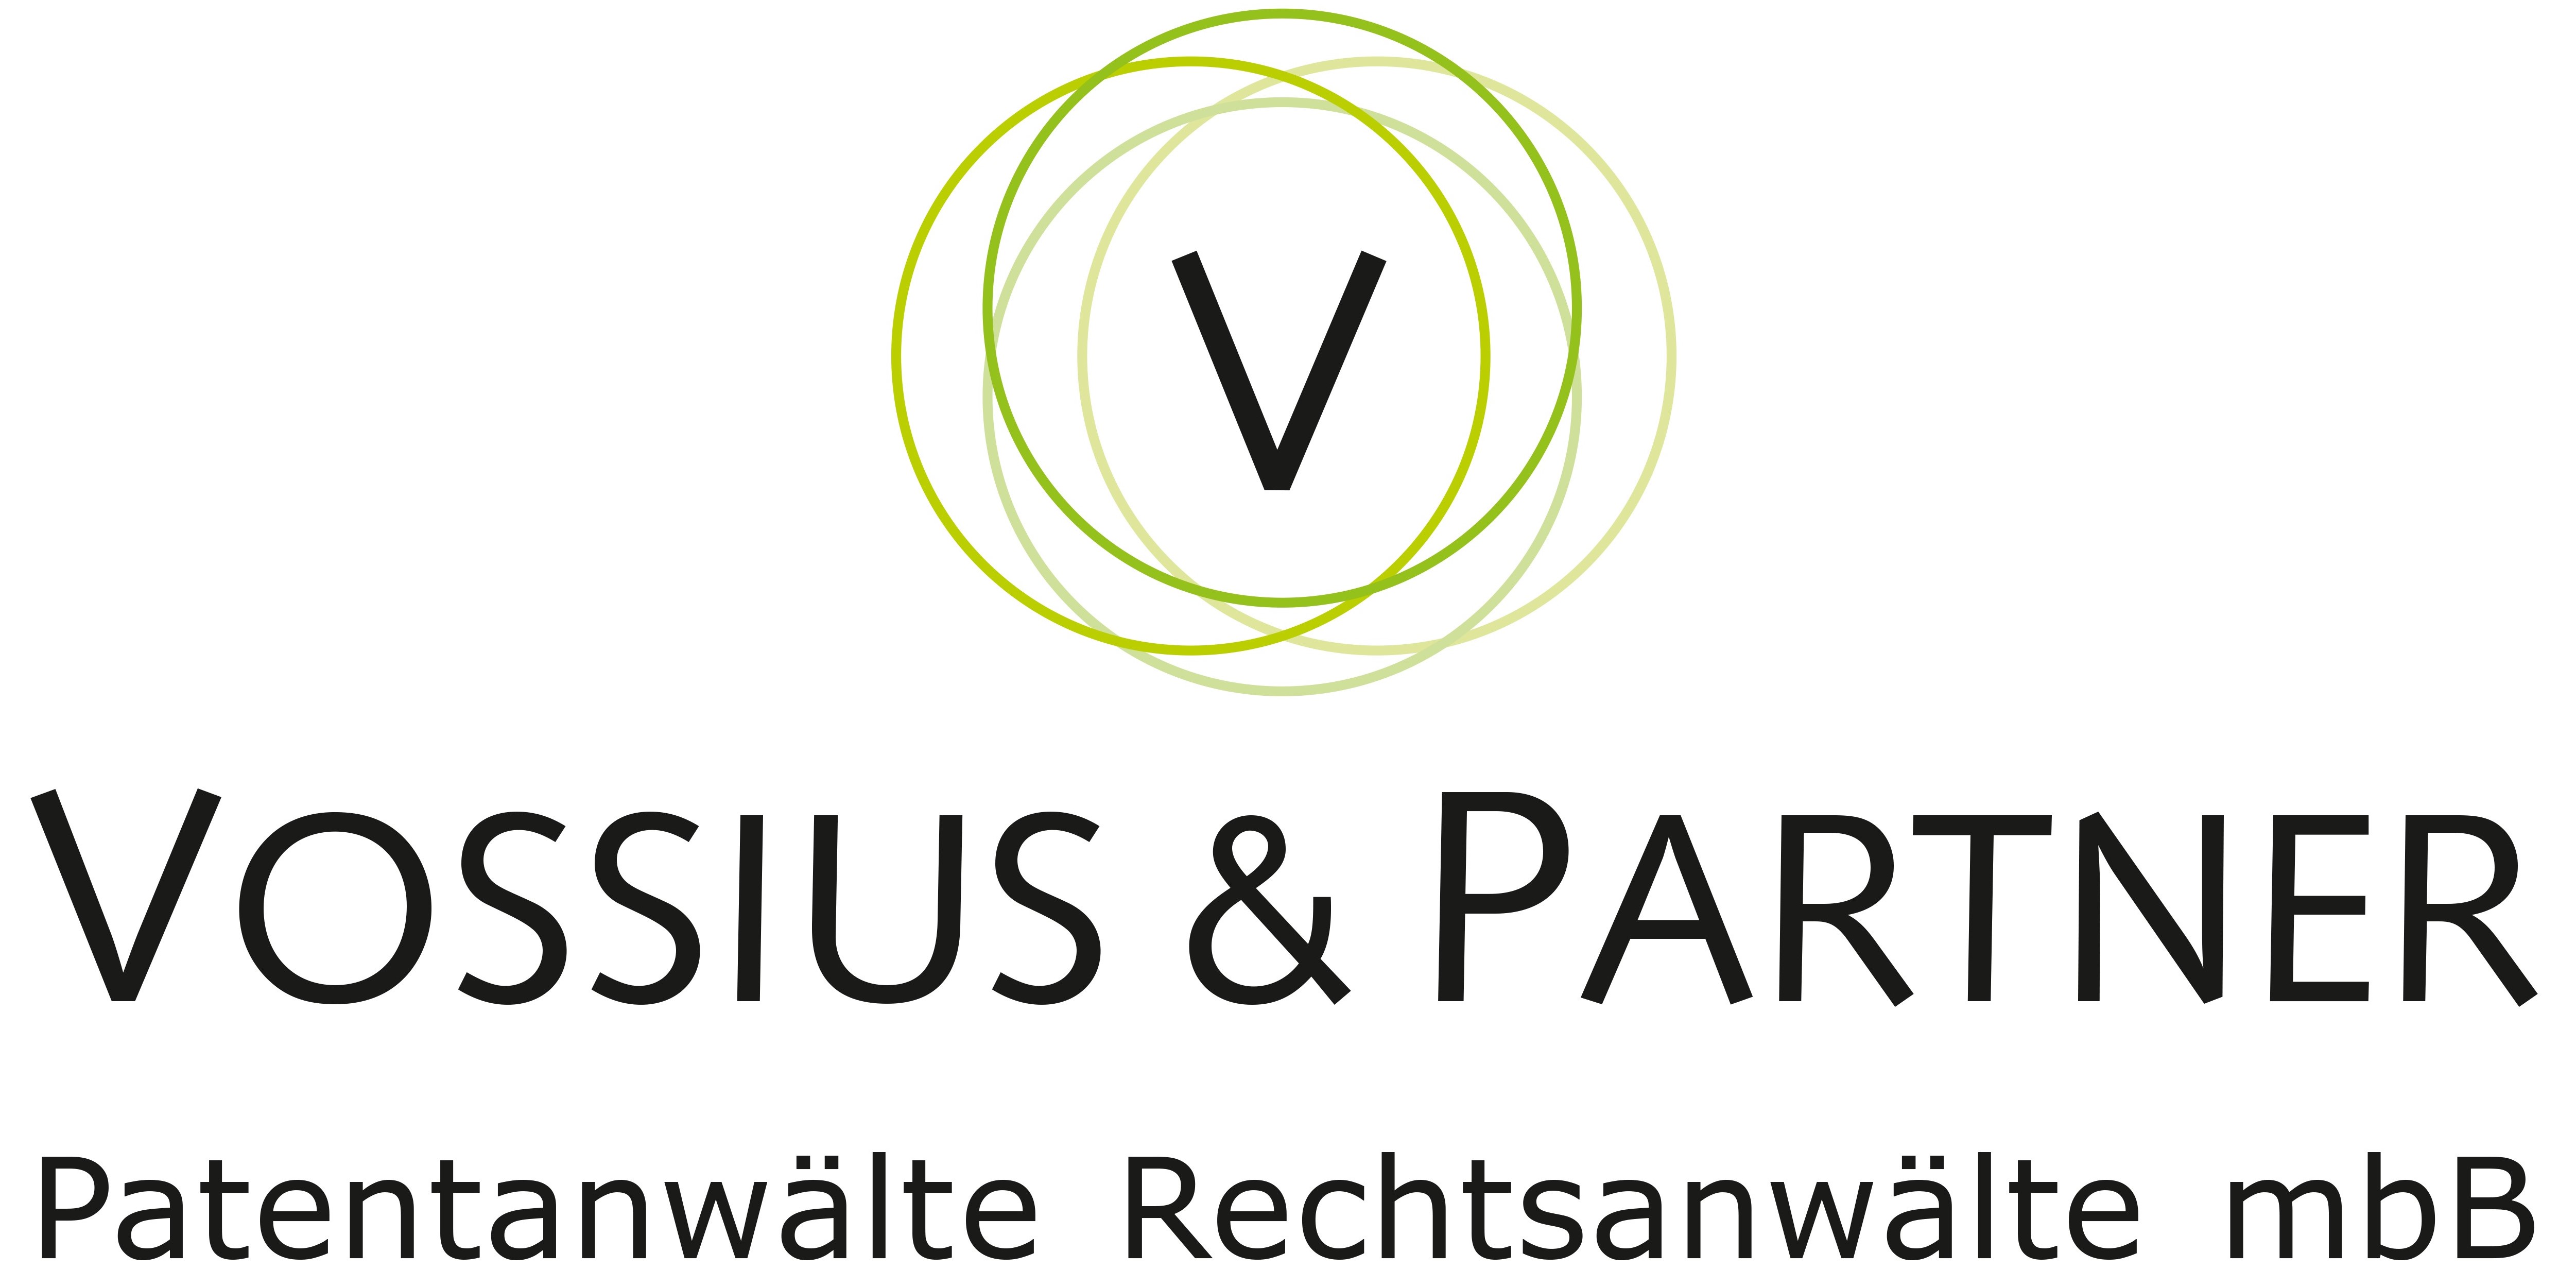 Vossius_and_Partner_Logo_Crop.jpg